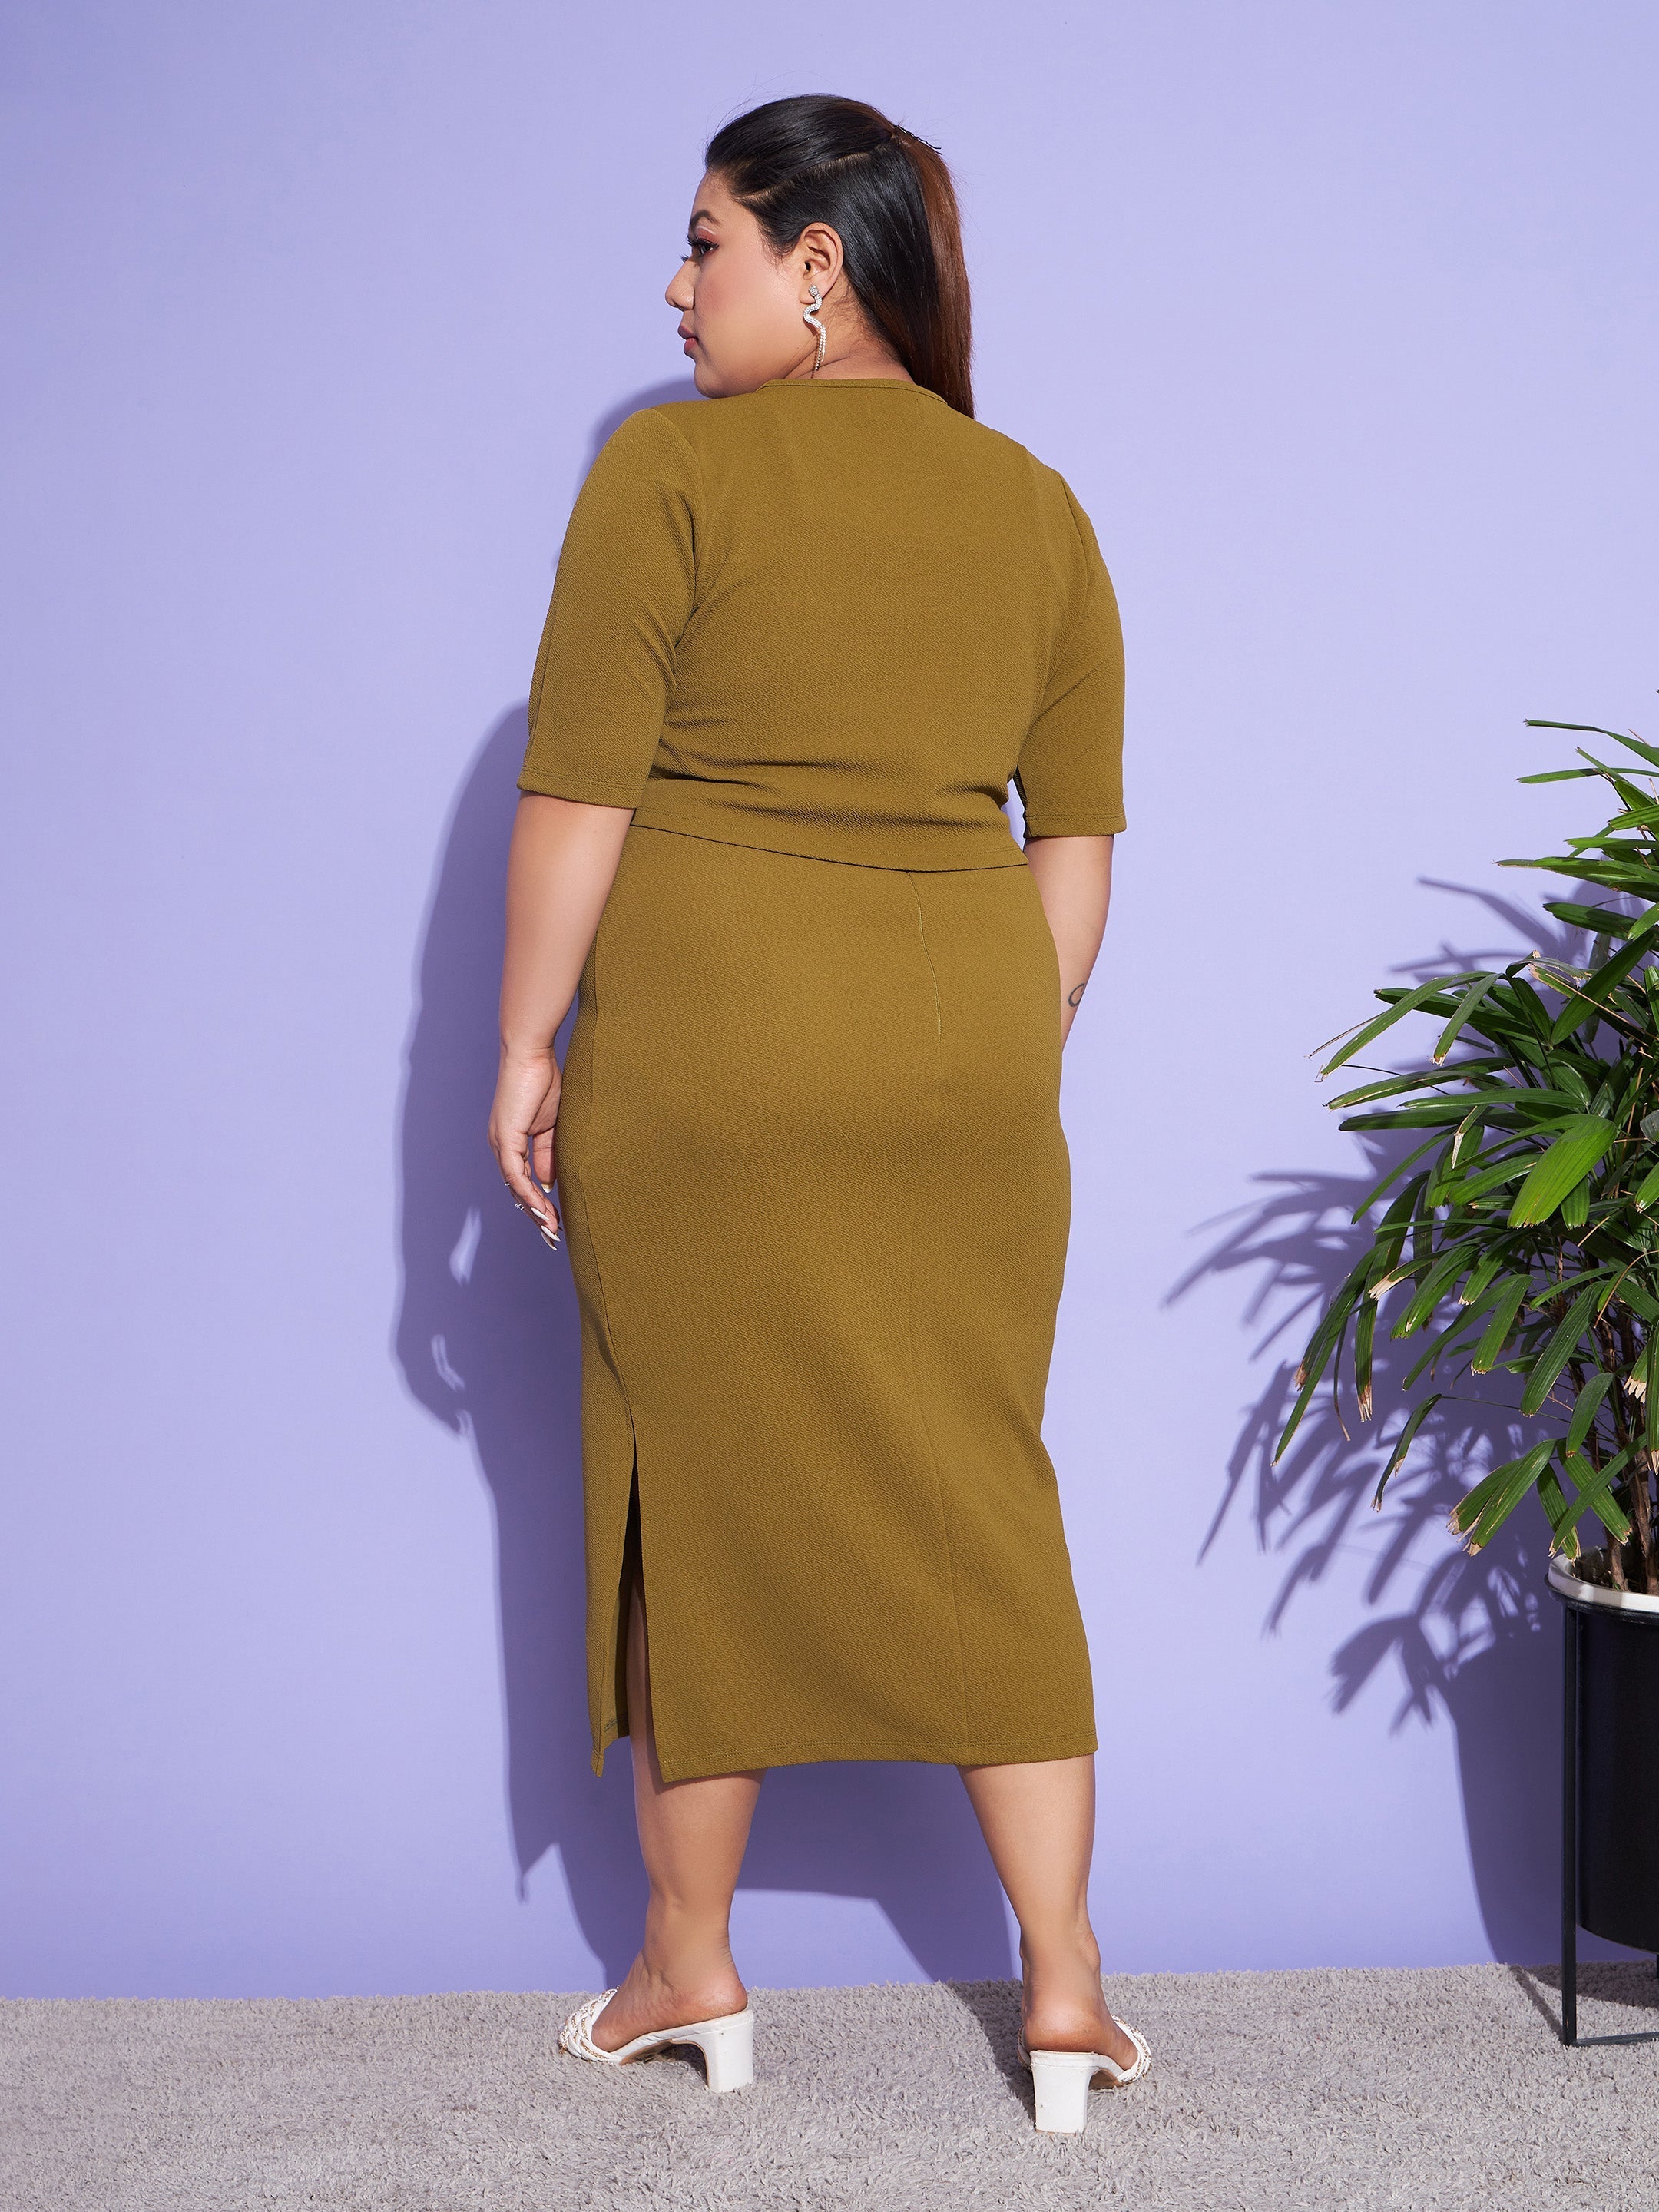 Women's Olive Solid Strappy Dress With Shrug - SASSAFRAS